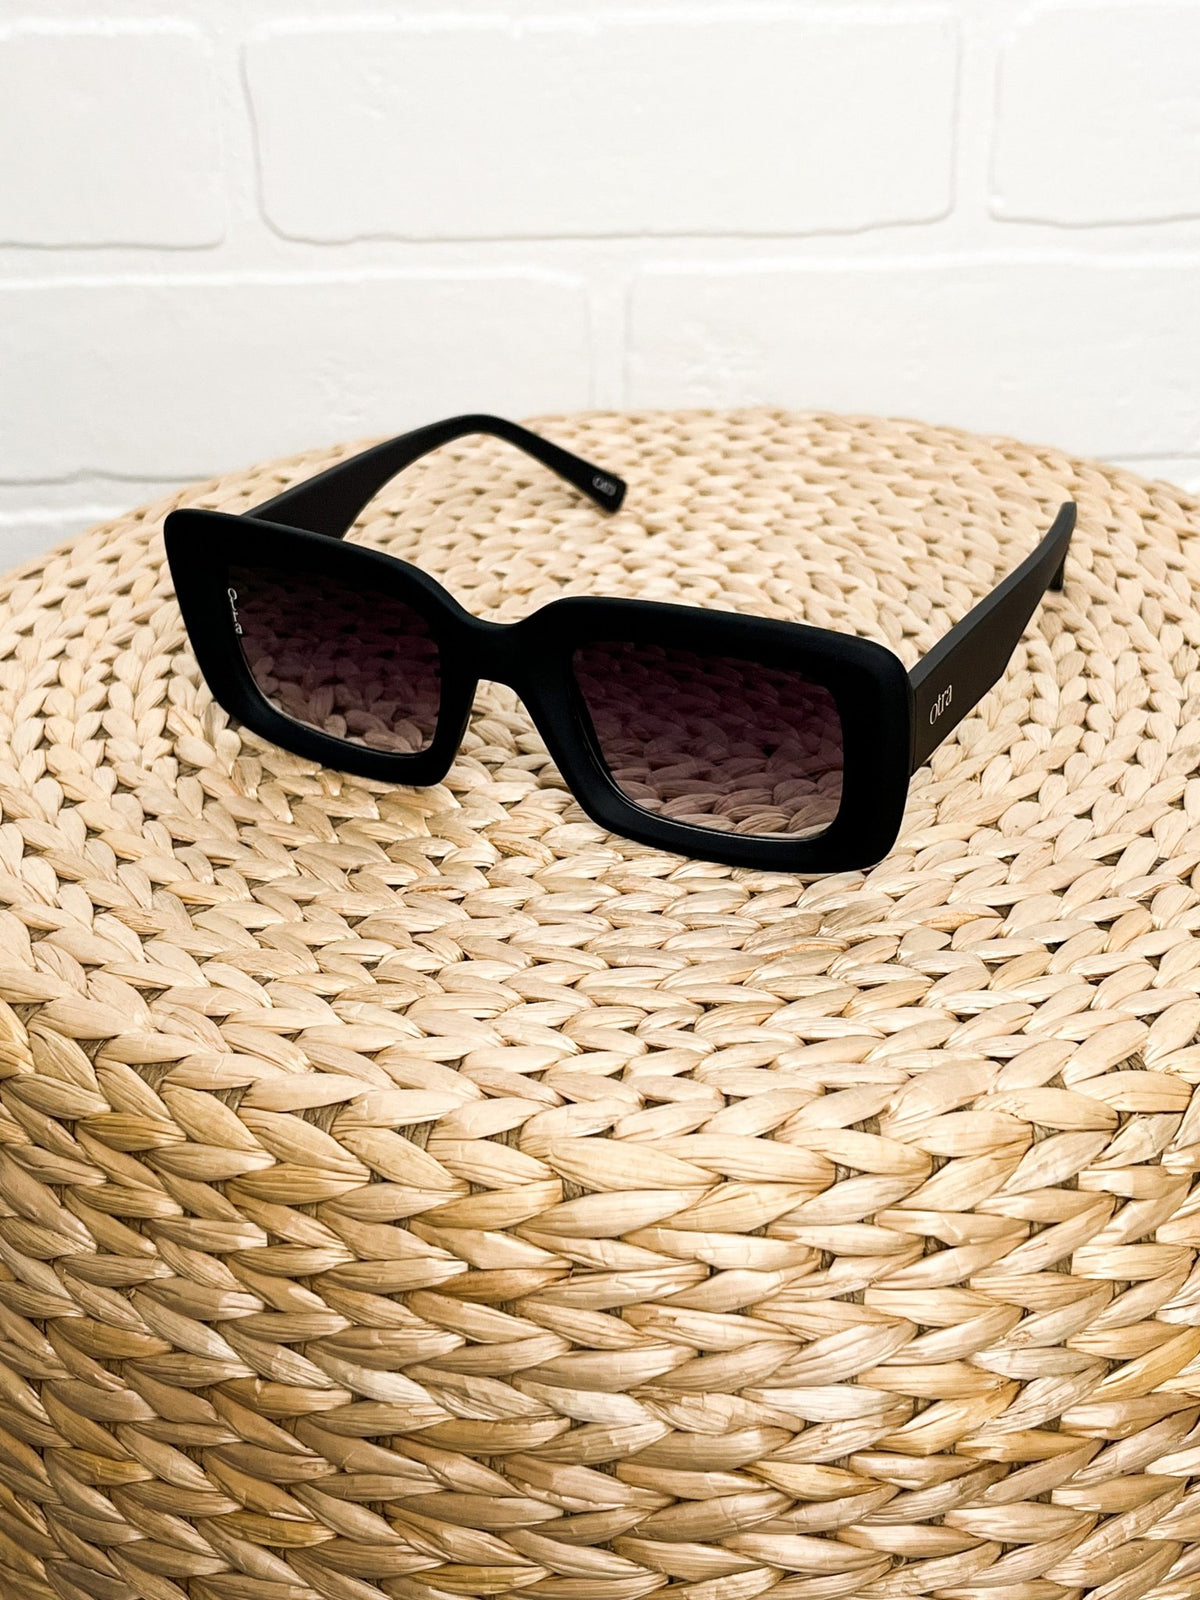 Otra Chelsea sunglasses black fade - Stylish Sunglasses - Cute Sunglasses at Lush Fashion Lounge Boutique in Oklahoma